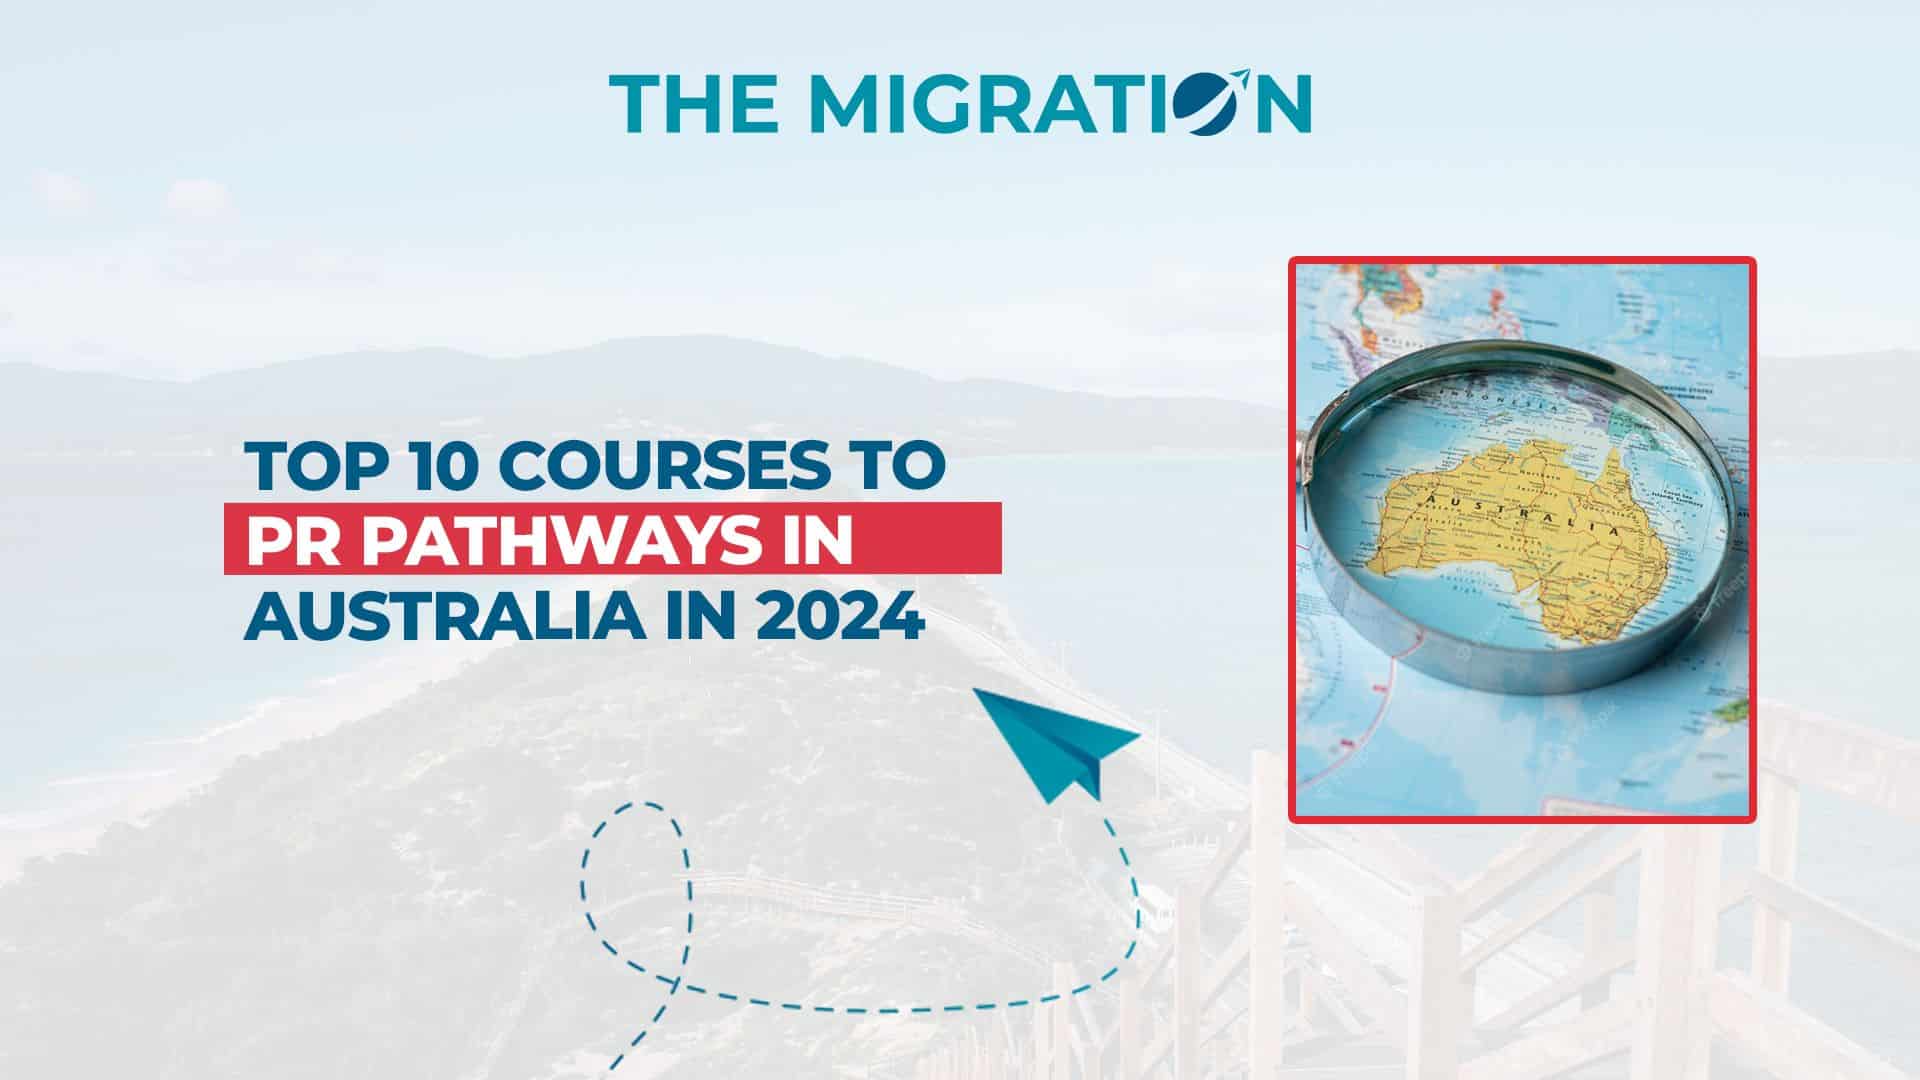 Top 10 Courses to PR Pathways in Australia in 2024